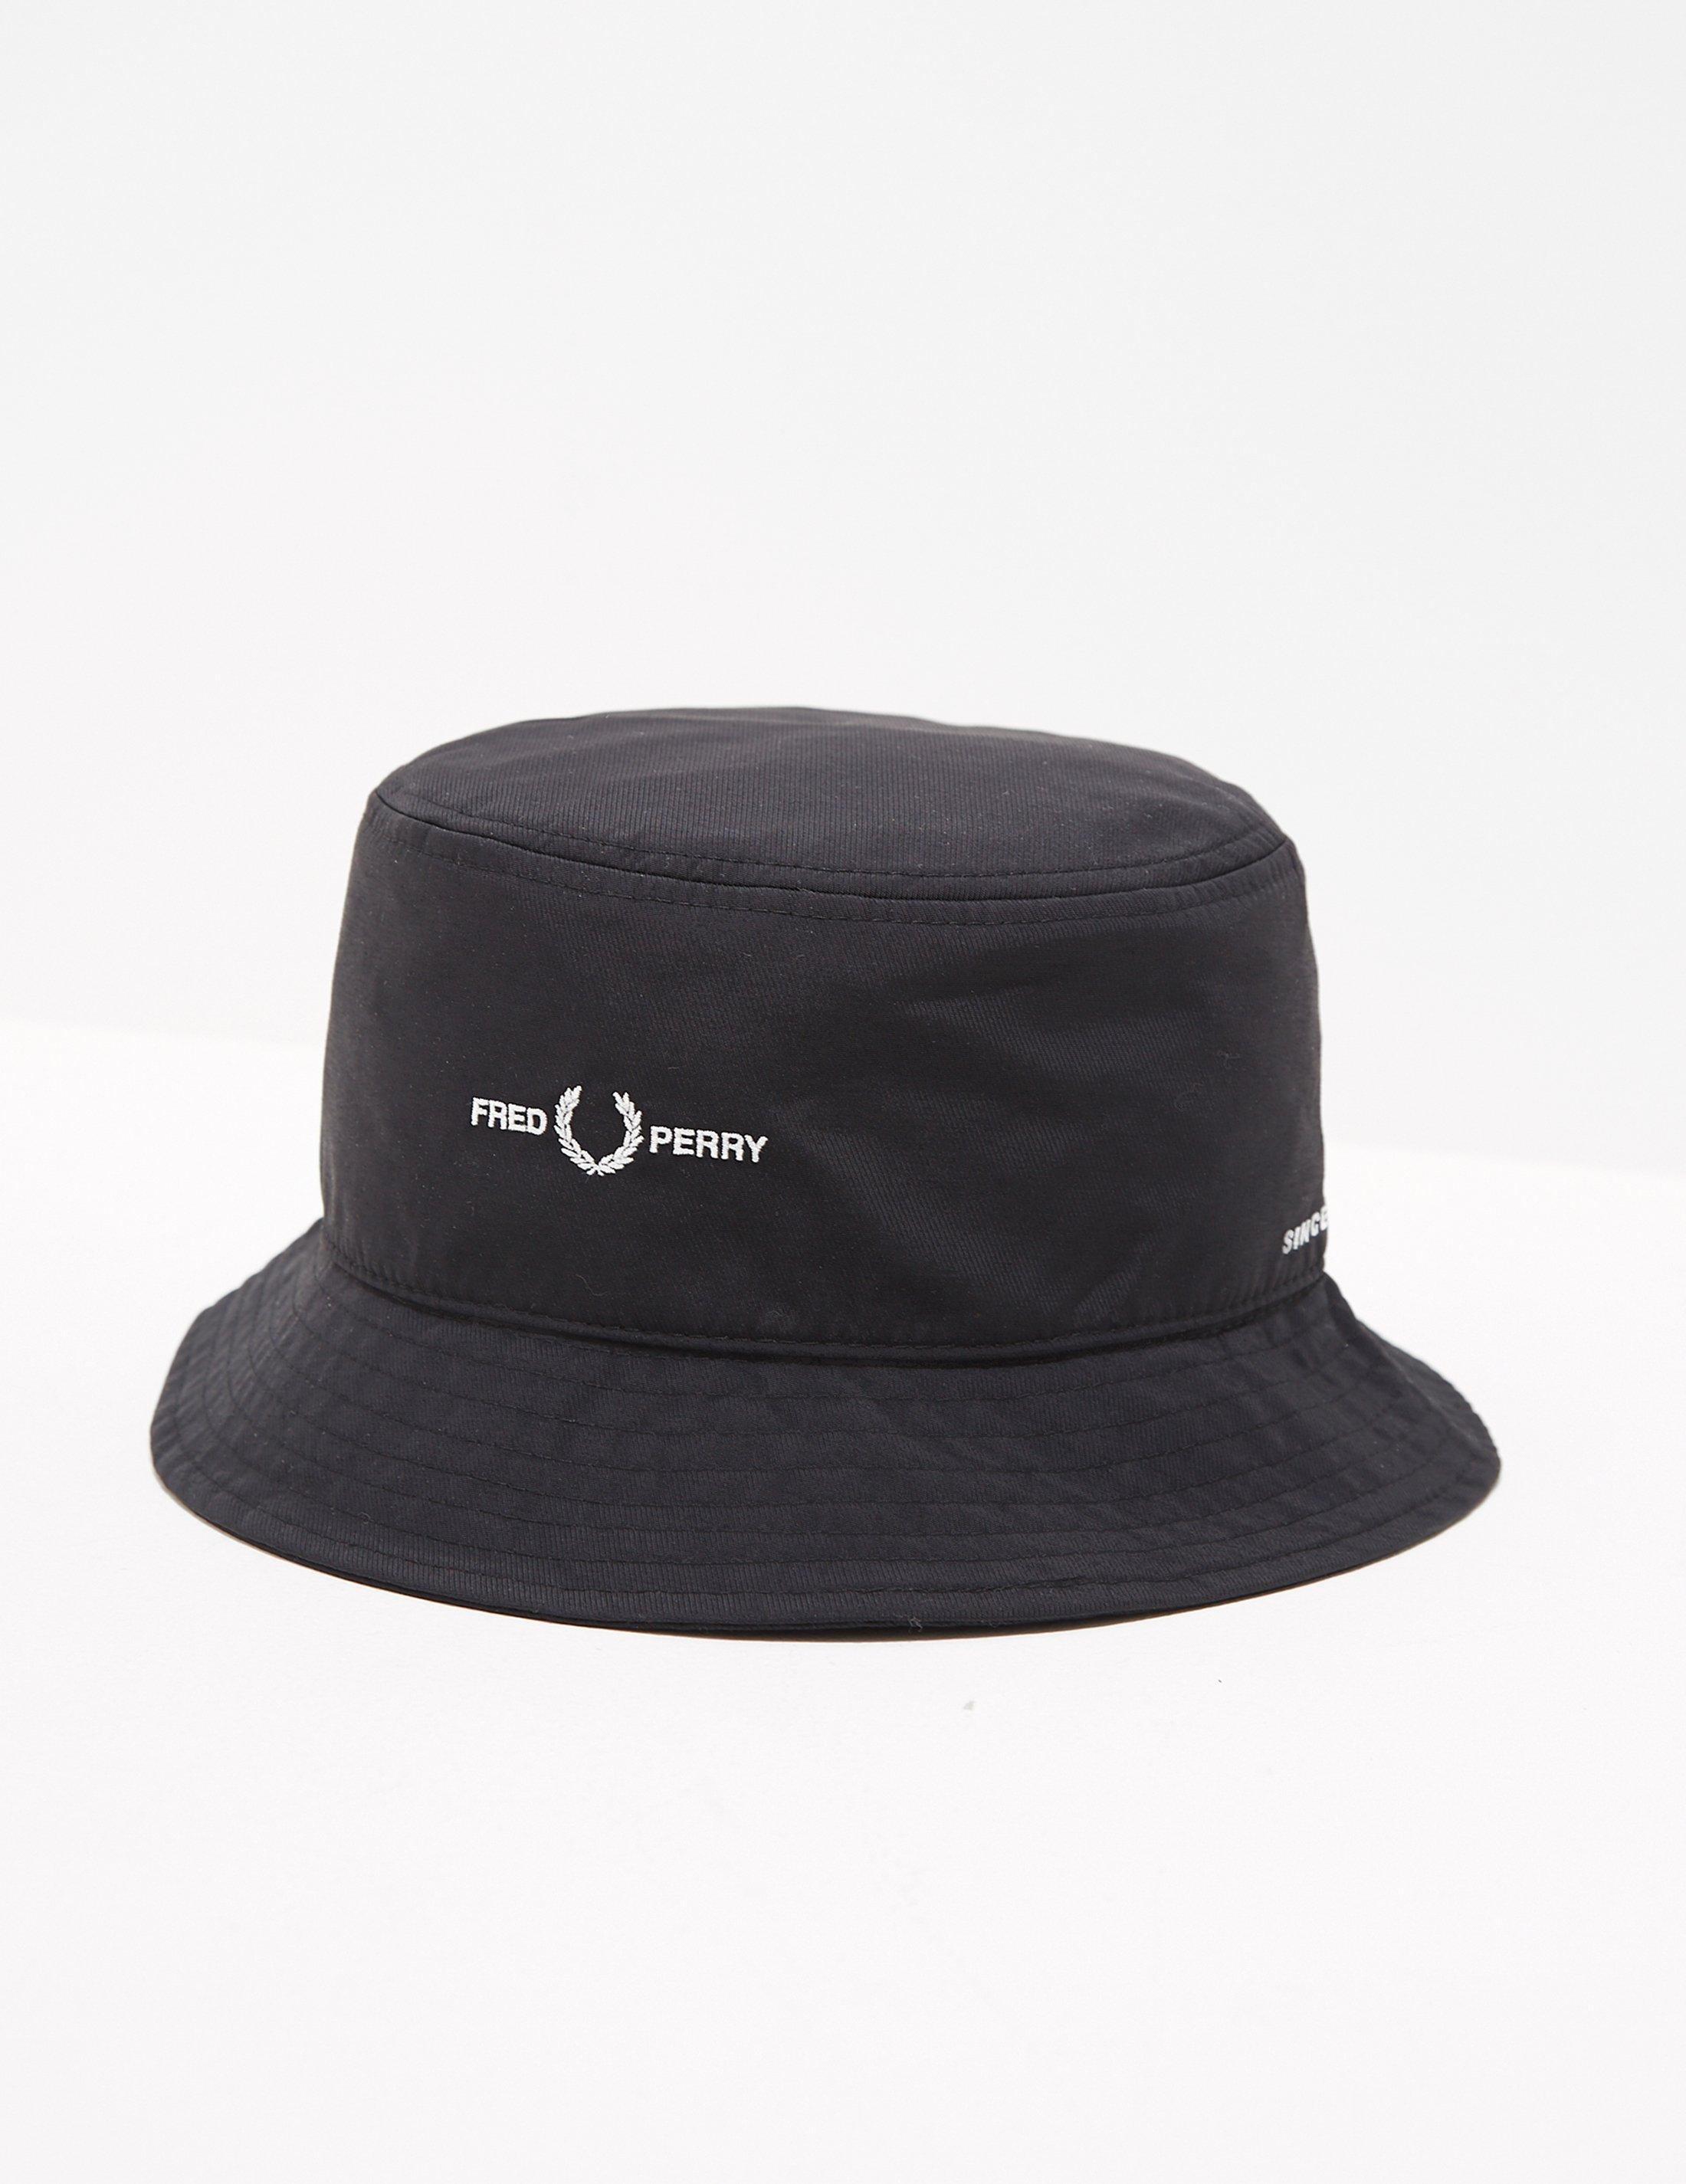 Fred Perry Sport Logo Bucket Hat Black/black for Men - Lyst